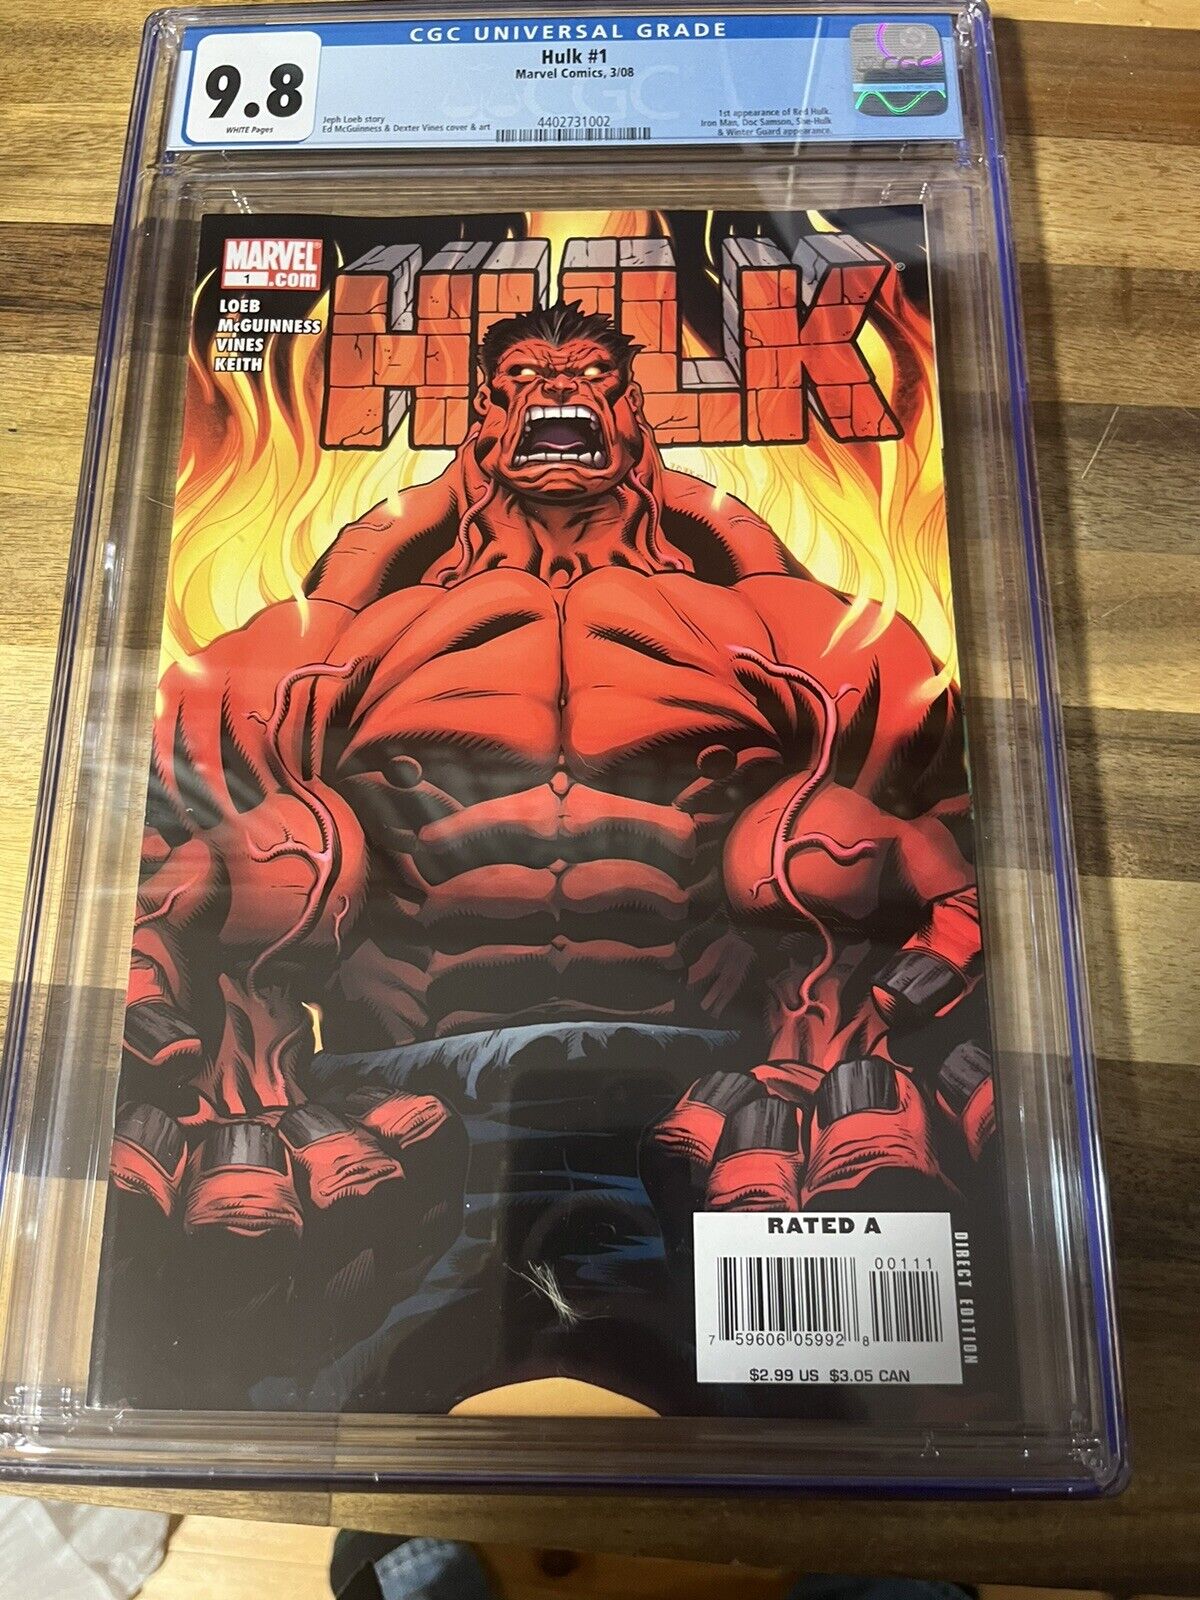 The Hulk #1 (Marvel Comics 2008) Please Read Description Before Buying.